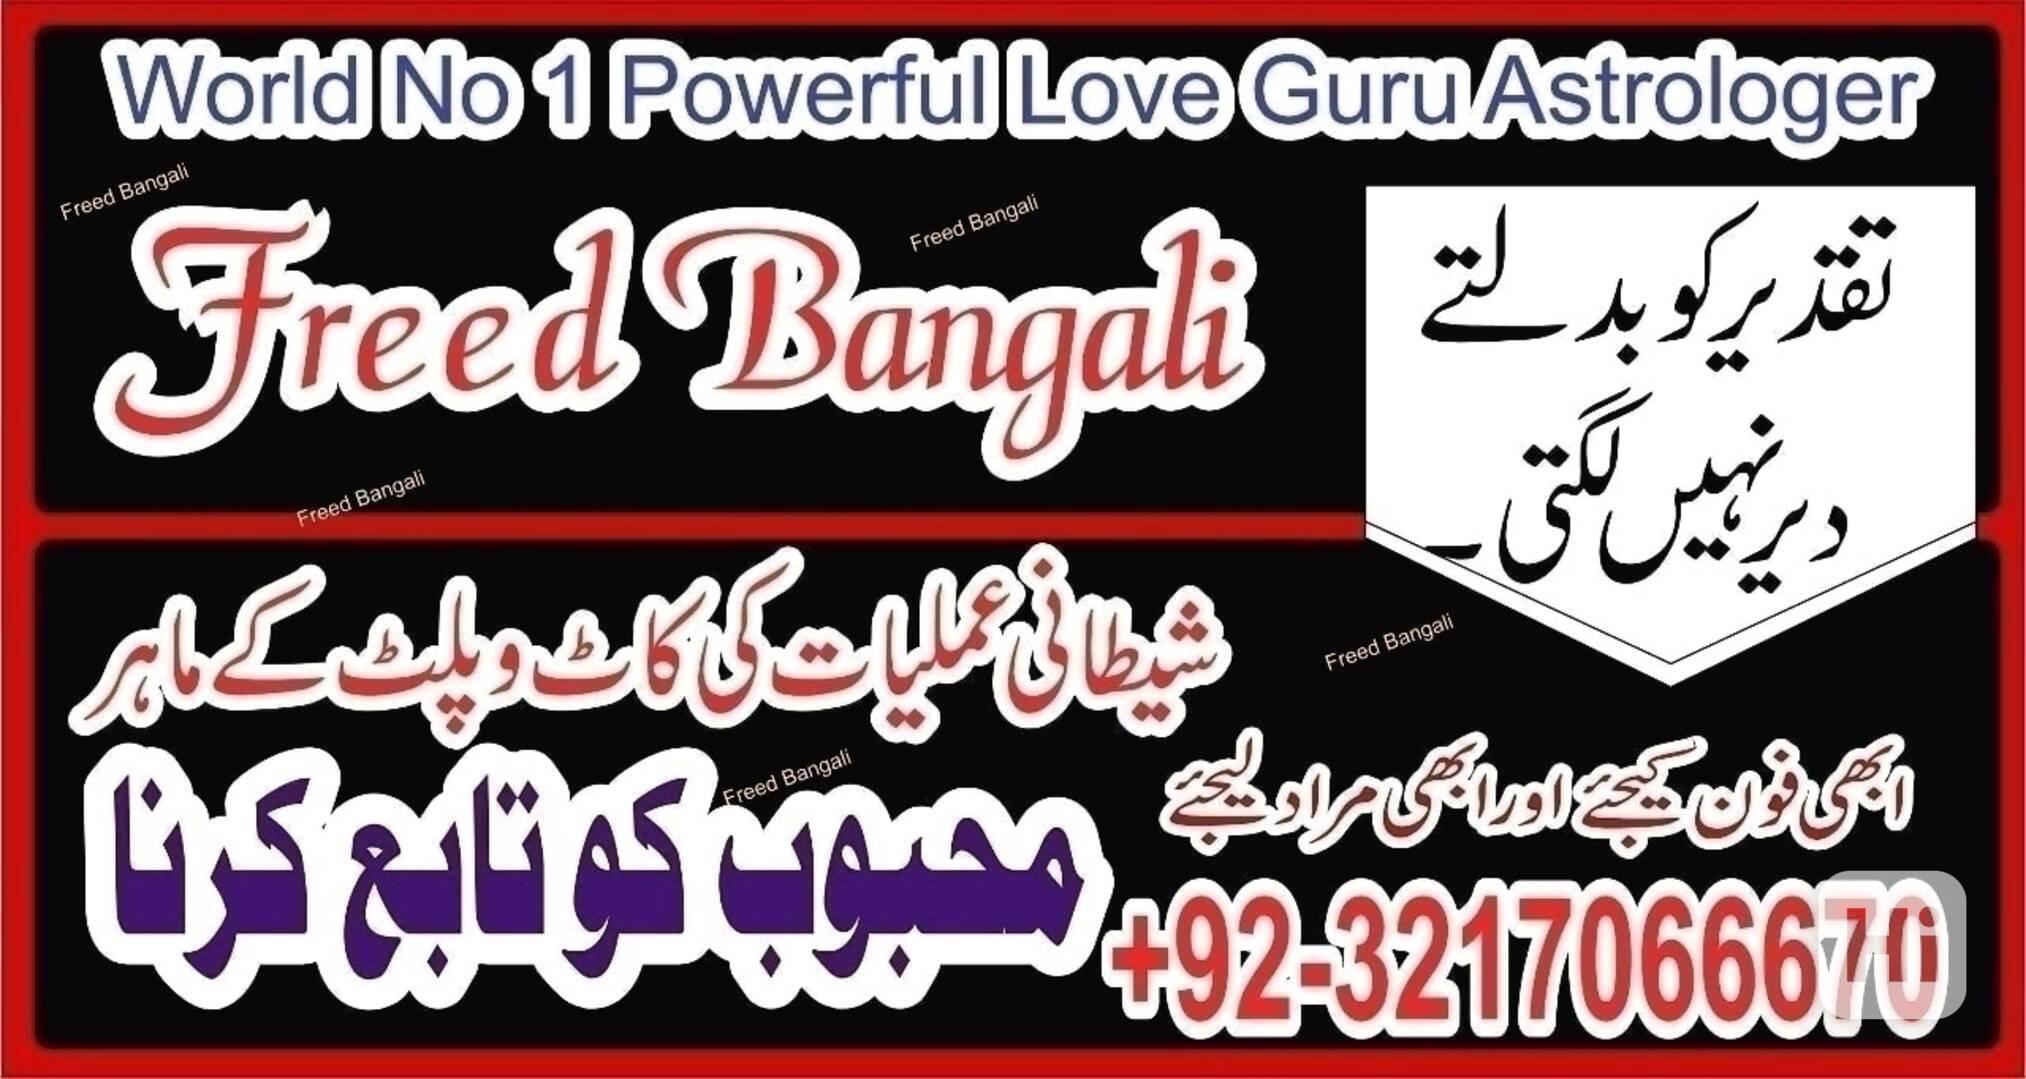 78 sifli ilam specialist for love spell in Dubai | kala jadu